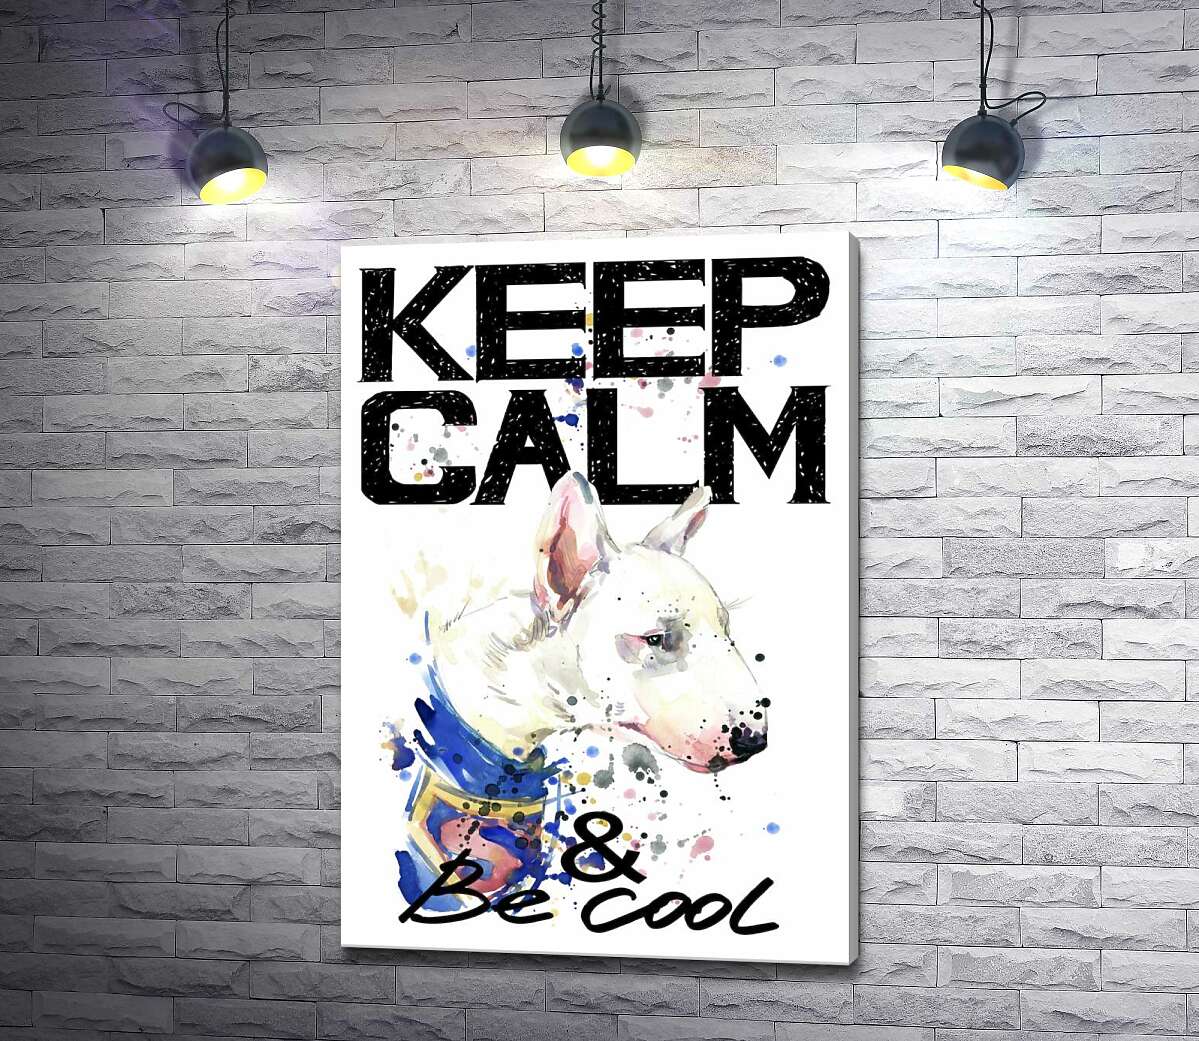 картина Профиль бультерьера среди надписи "keep calm and be cool"